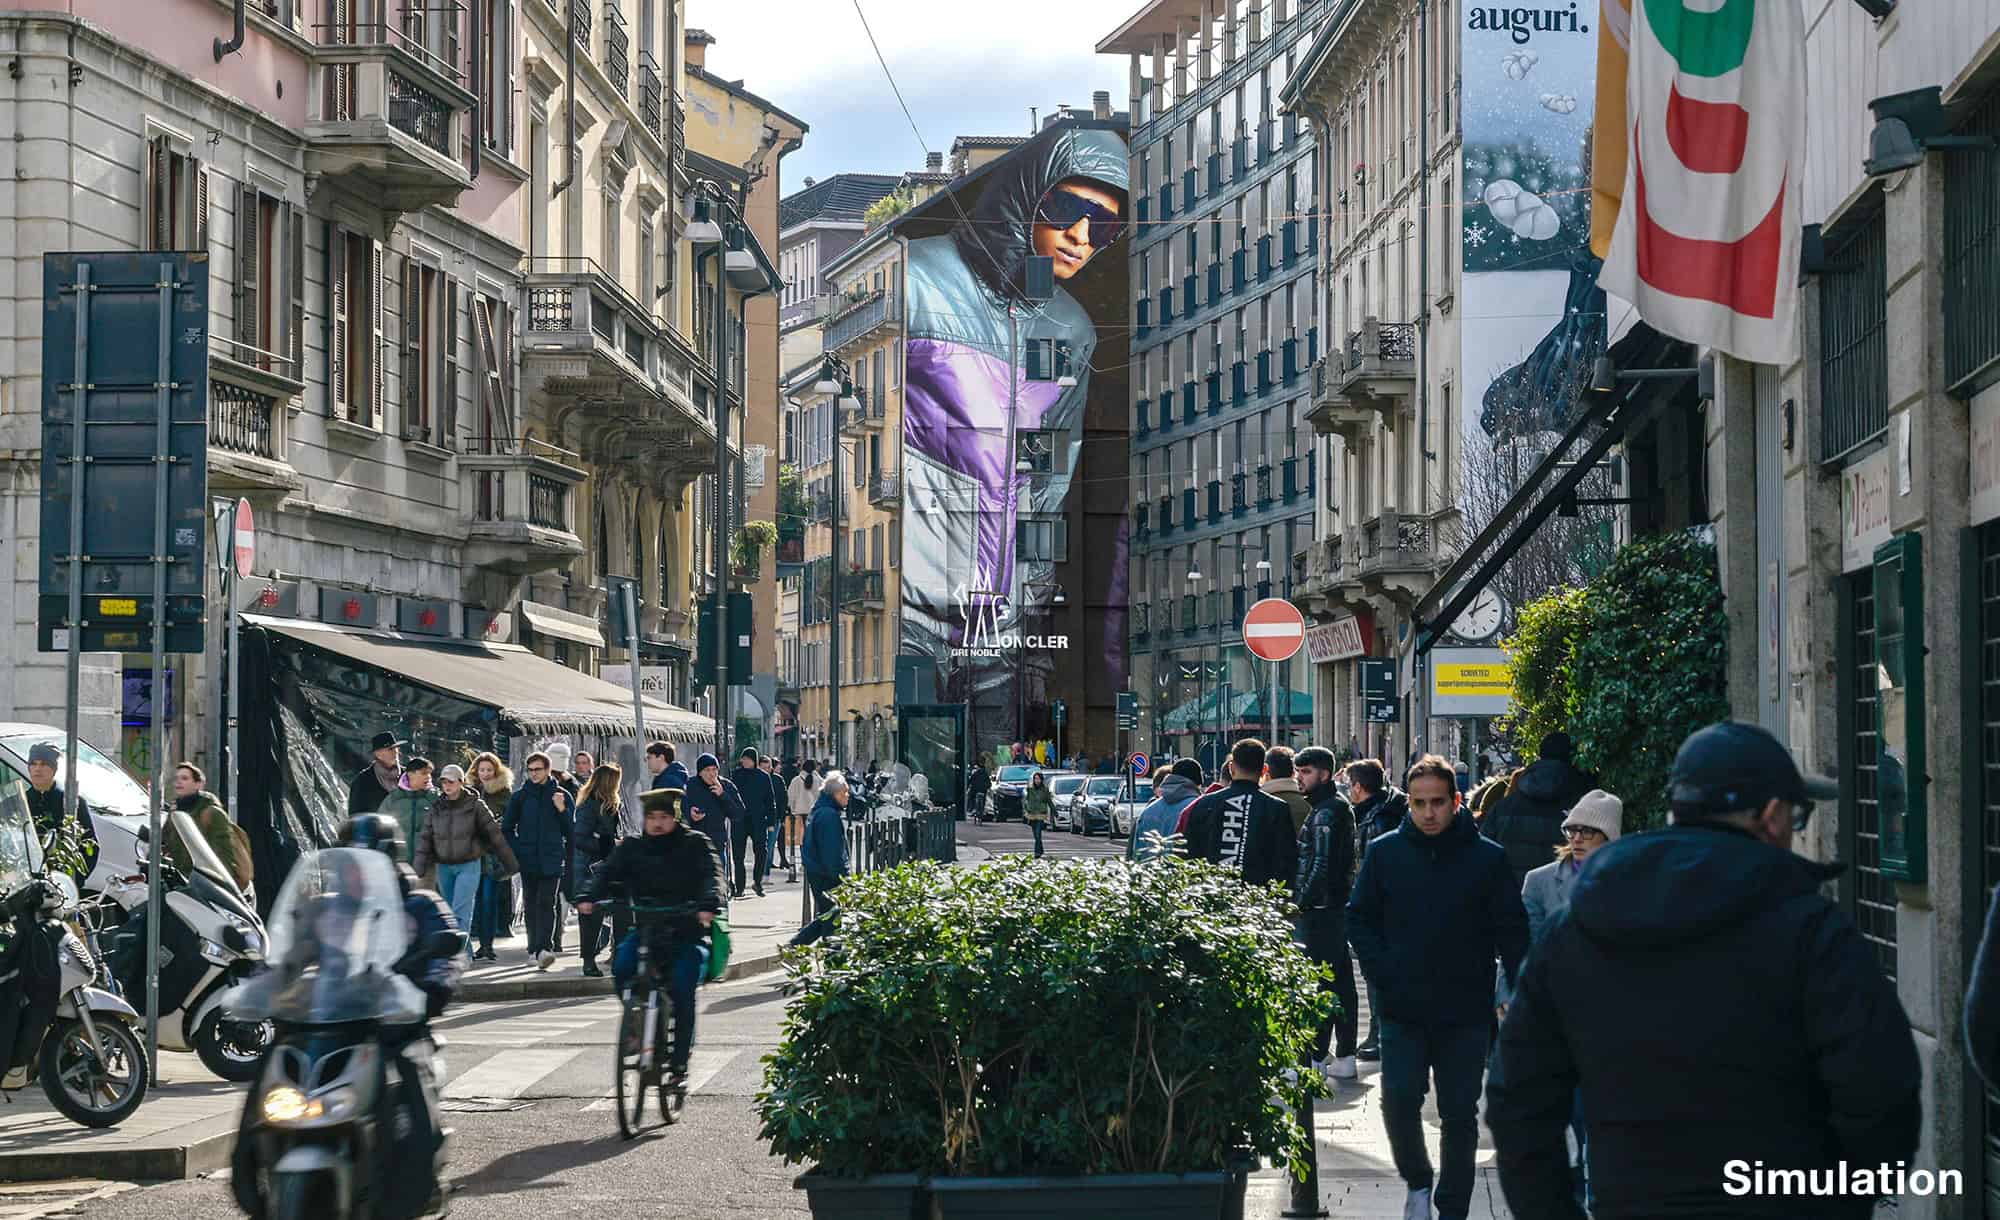 Mural Garibaldi 55 in Milan by Streetvox